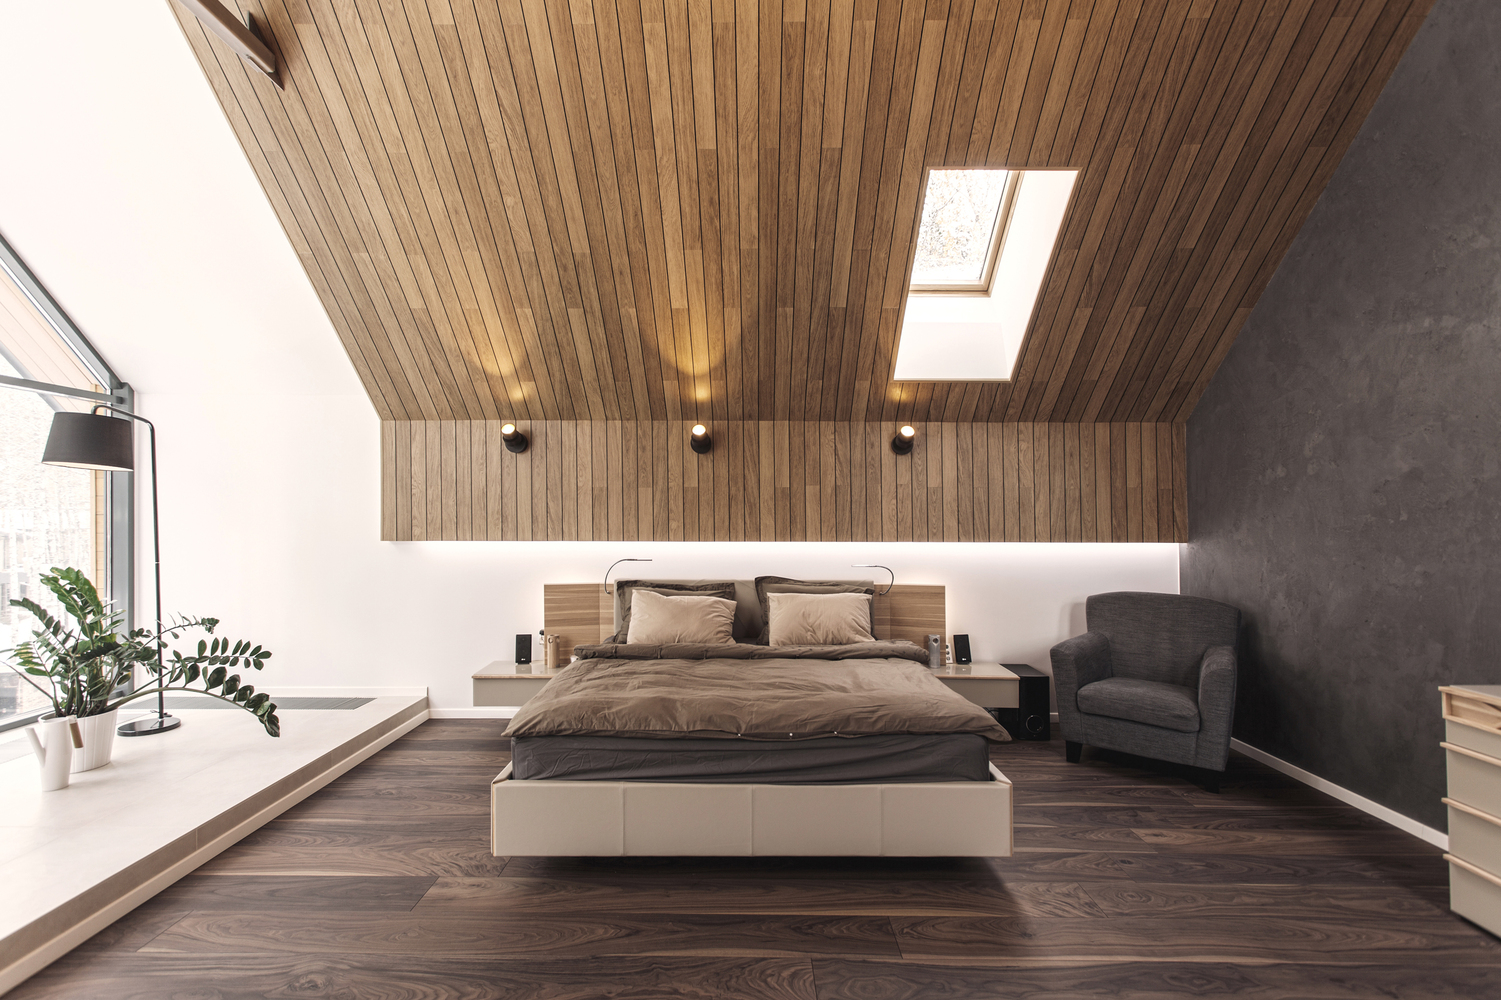 General 1501x1000 bed bedroom interior interior design modern